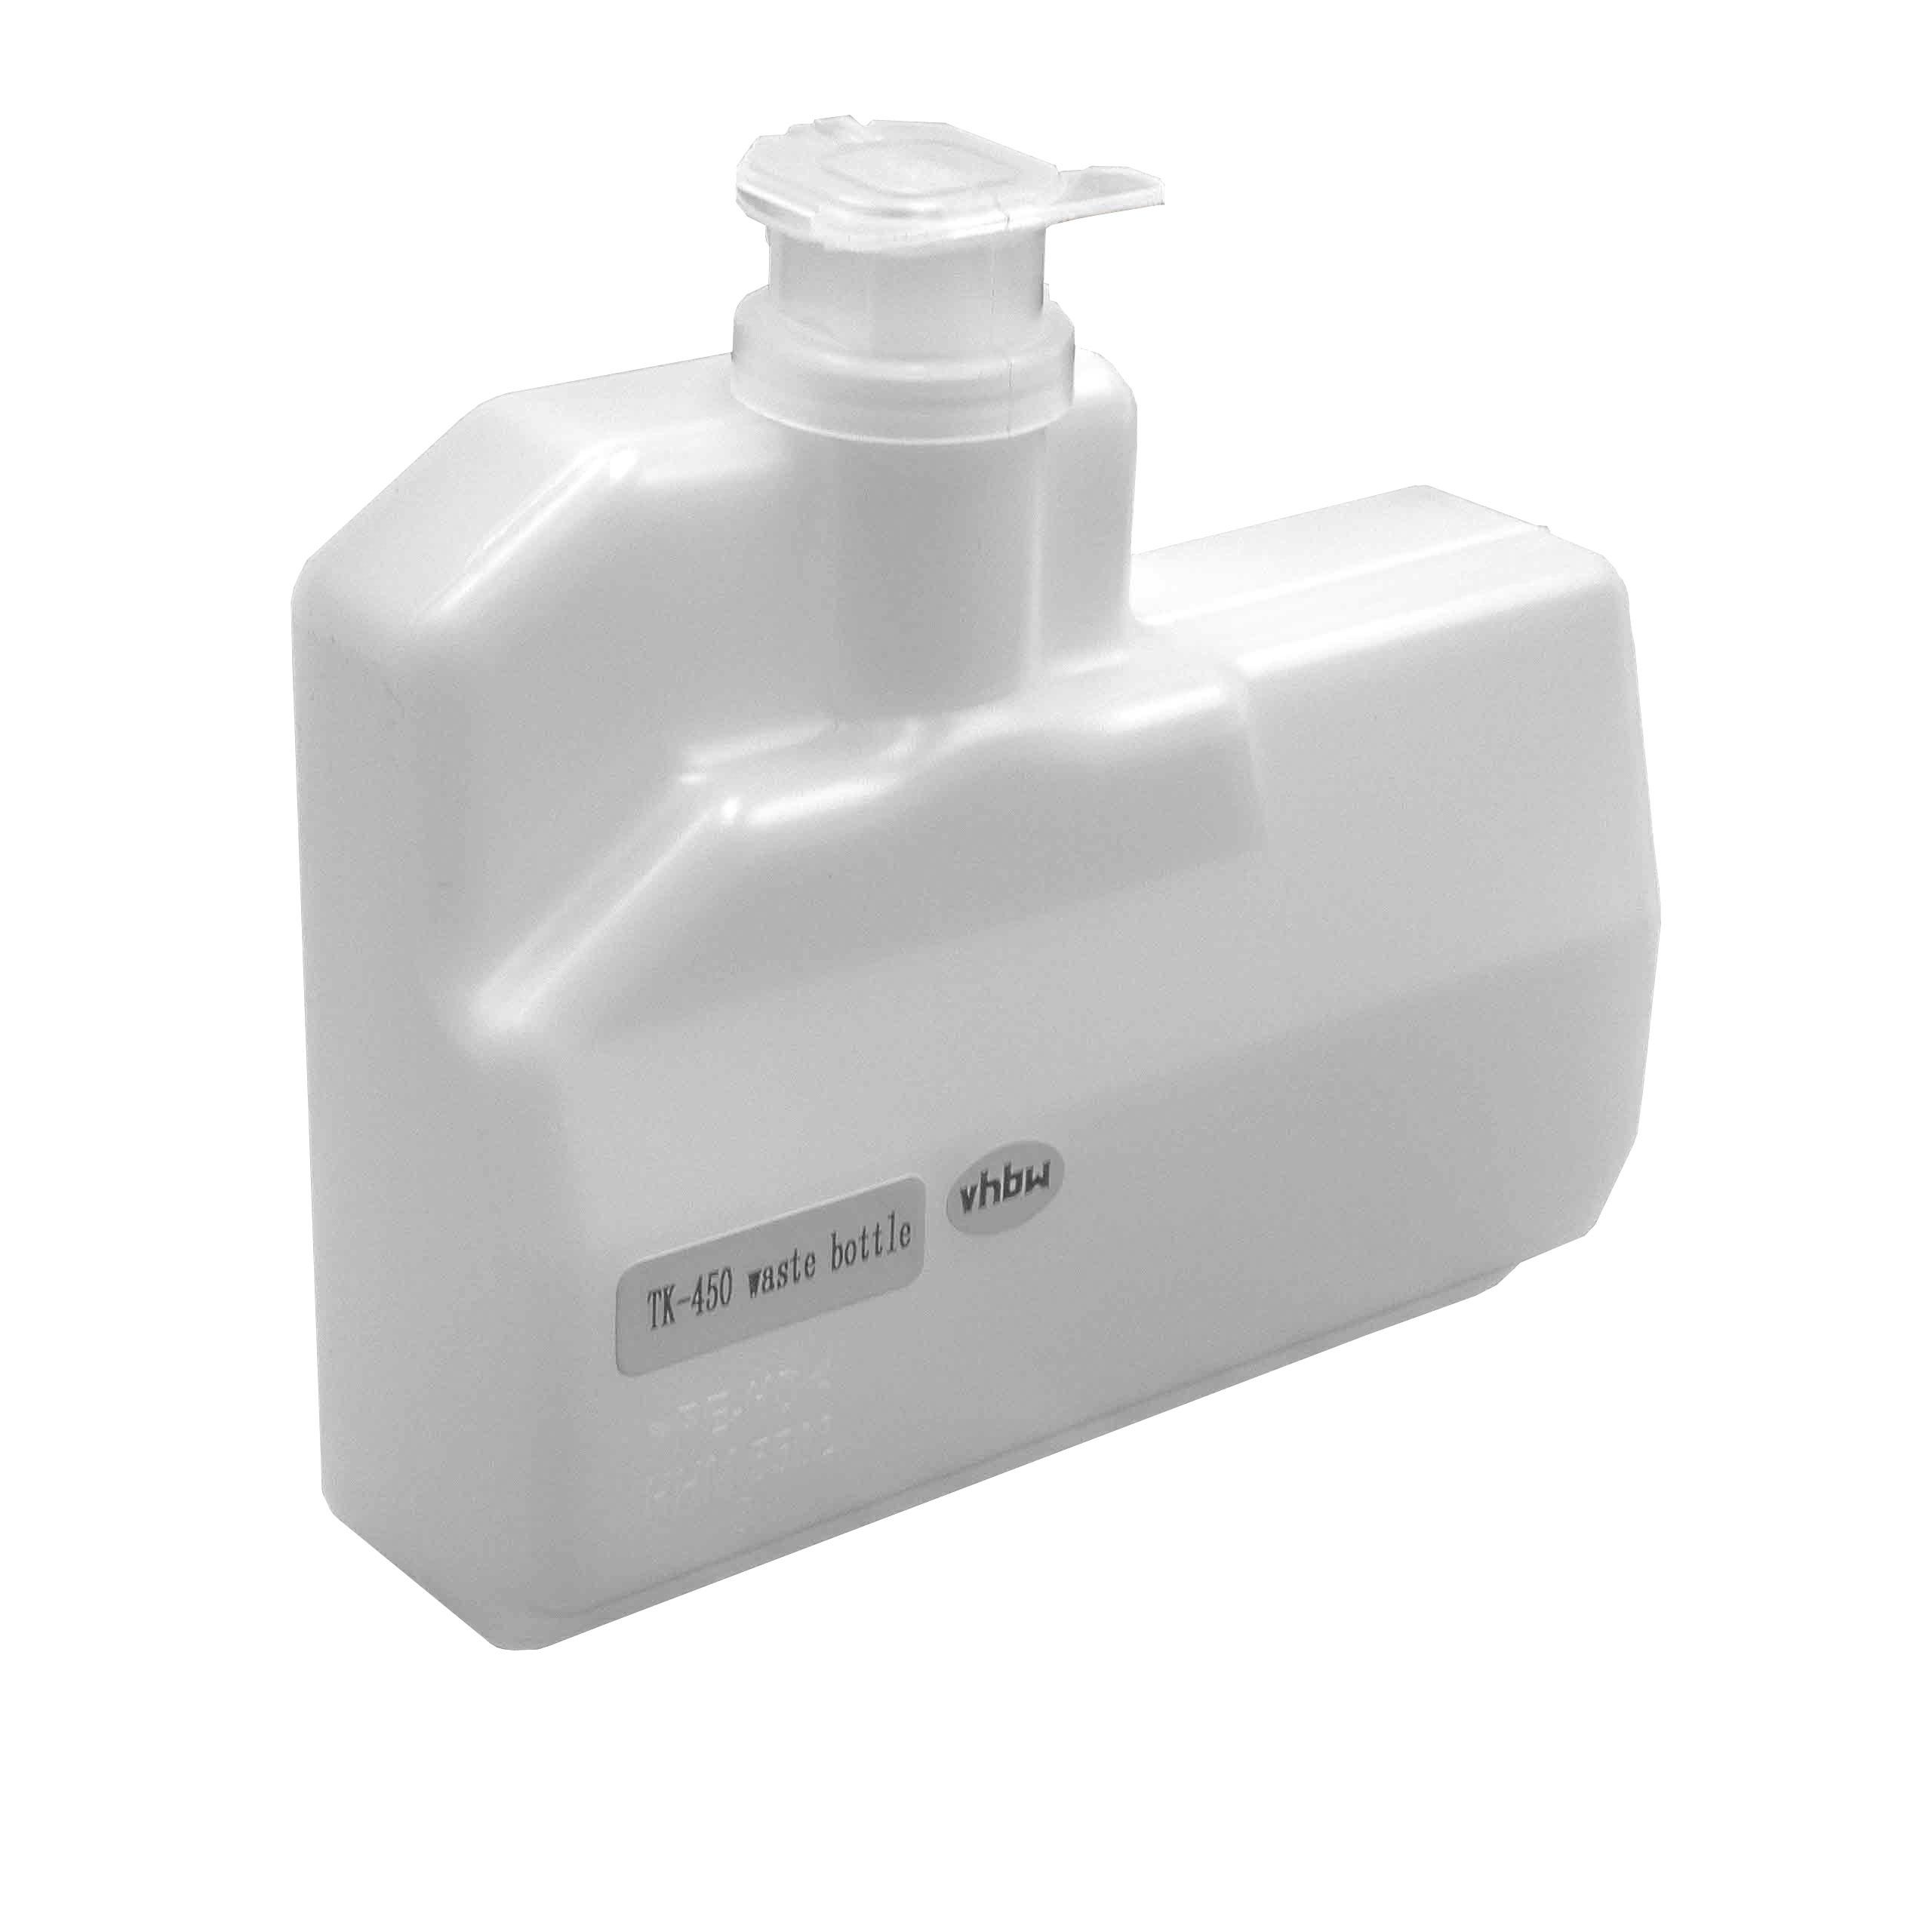 Waste Toner Container for Kyocera FS-6970 DN laser printer - White